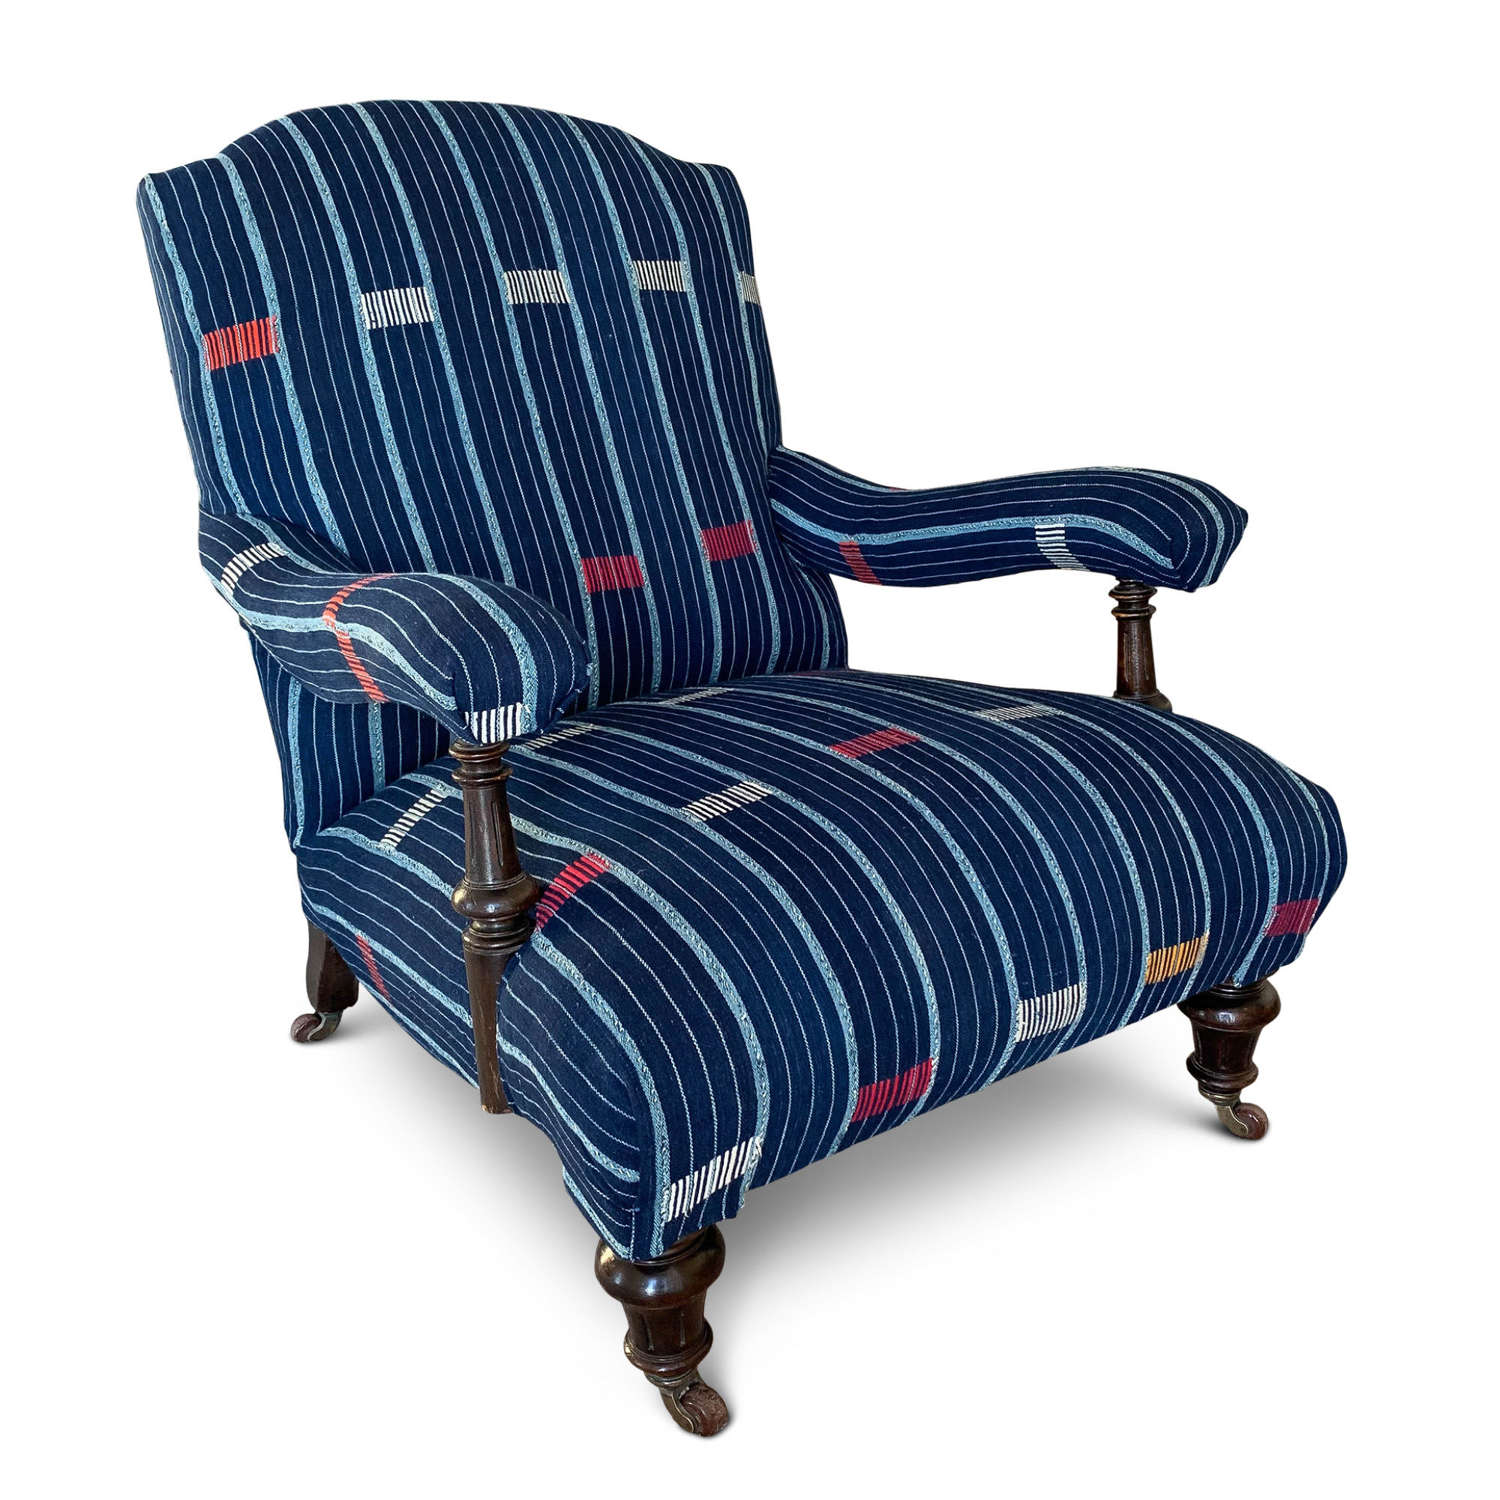 Library chair in vintage indigo textile